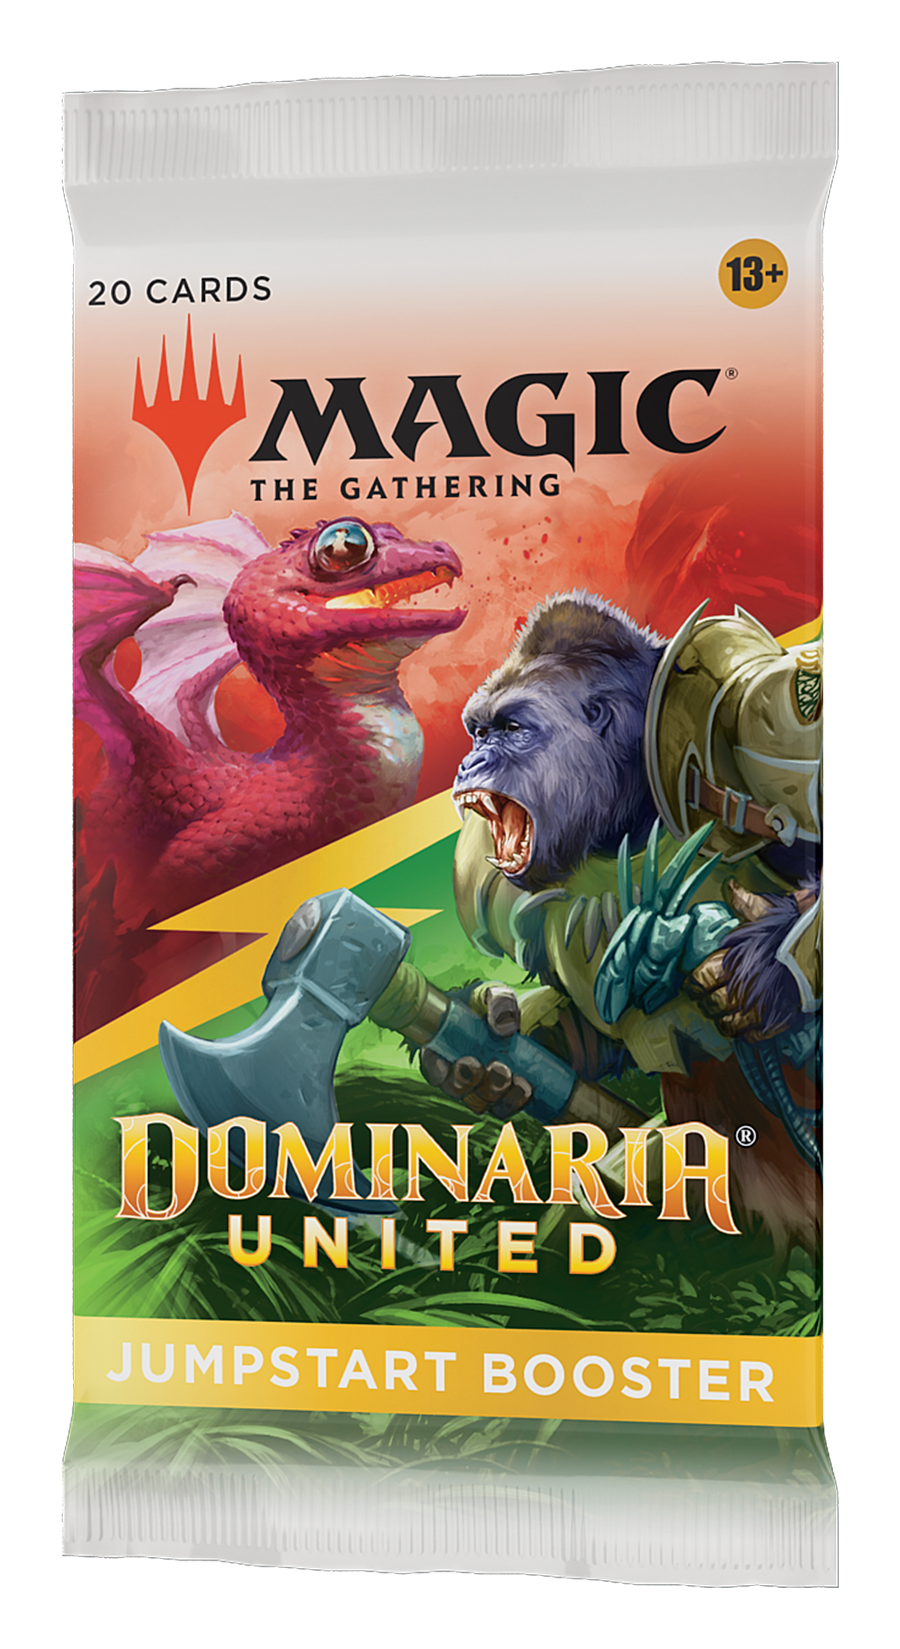 Magic: The Gathering Dominaria United Jumpstart Booster